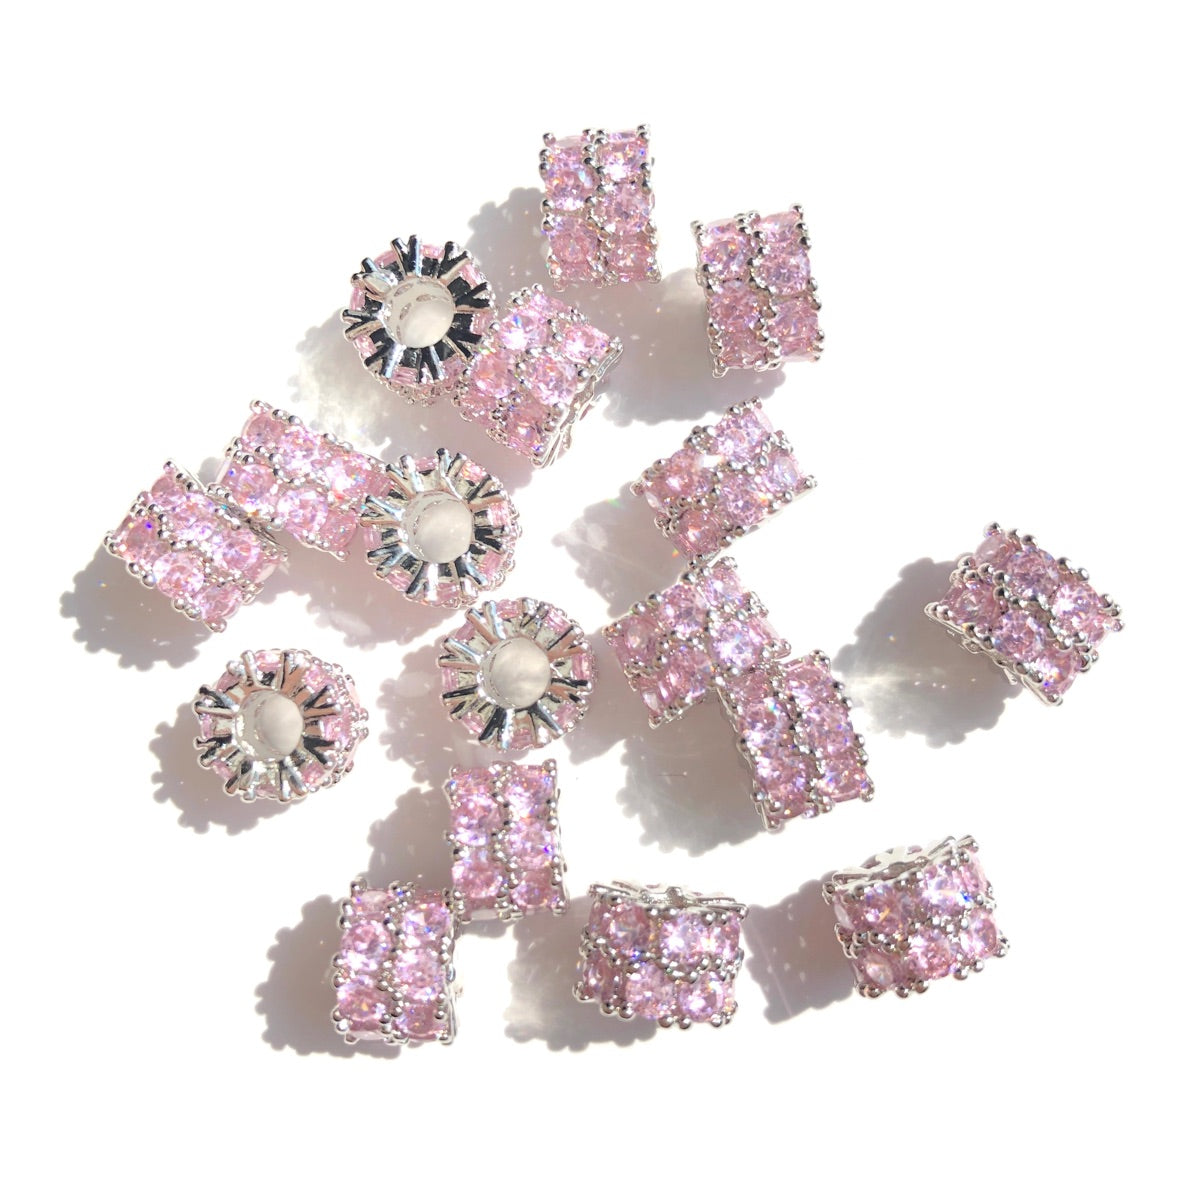 10-20-50pcs/lot 8.4mm Pink CZ Paved Big Hole Rondelle Wheel Spacers Silver CZ Paved Spacers Big Hole Beads New Spacers Arrivals Rondelle Beads Wholesale Charms Beads Beyond